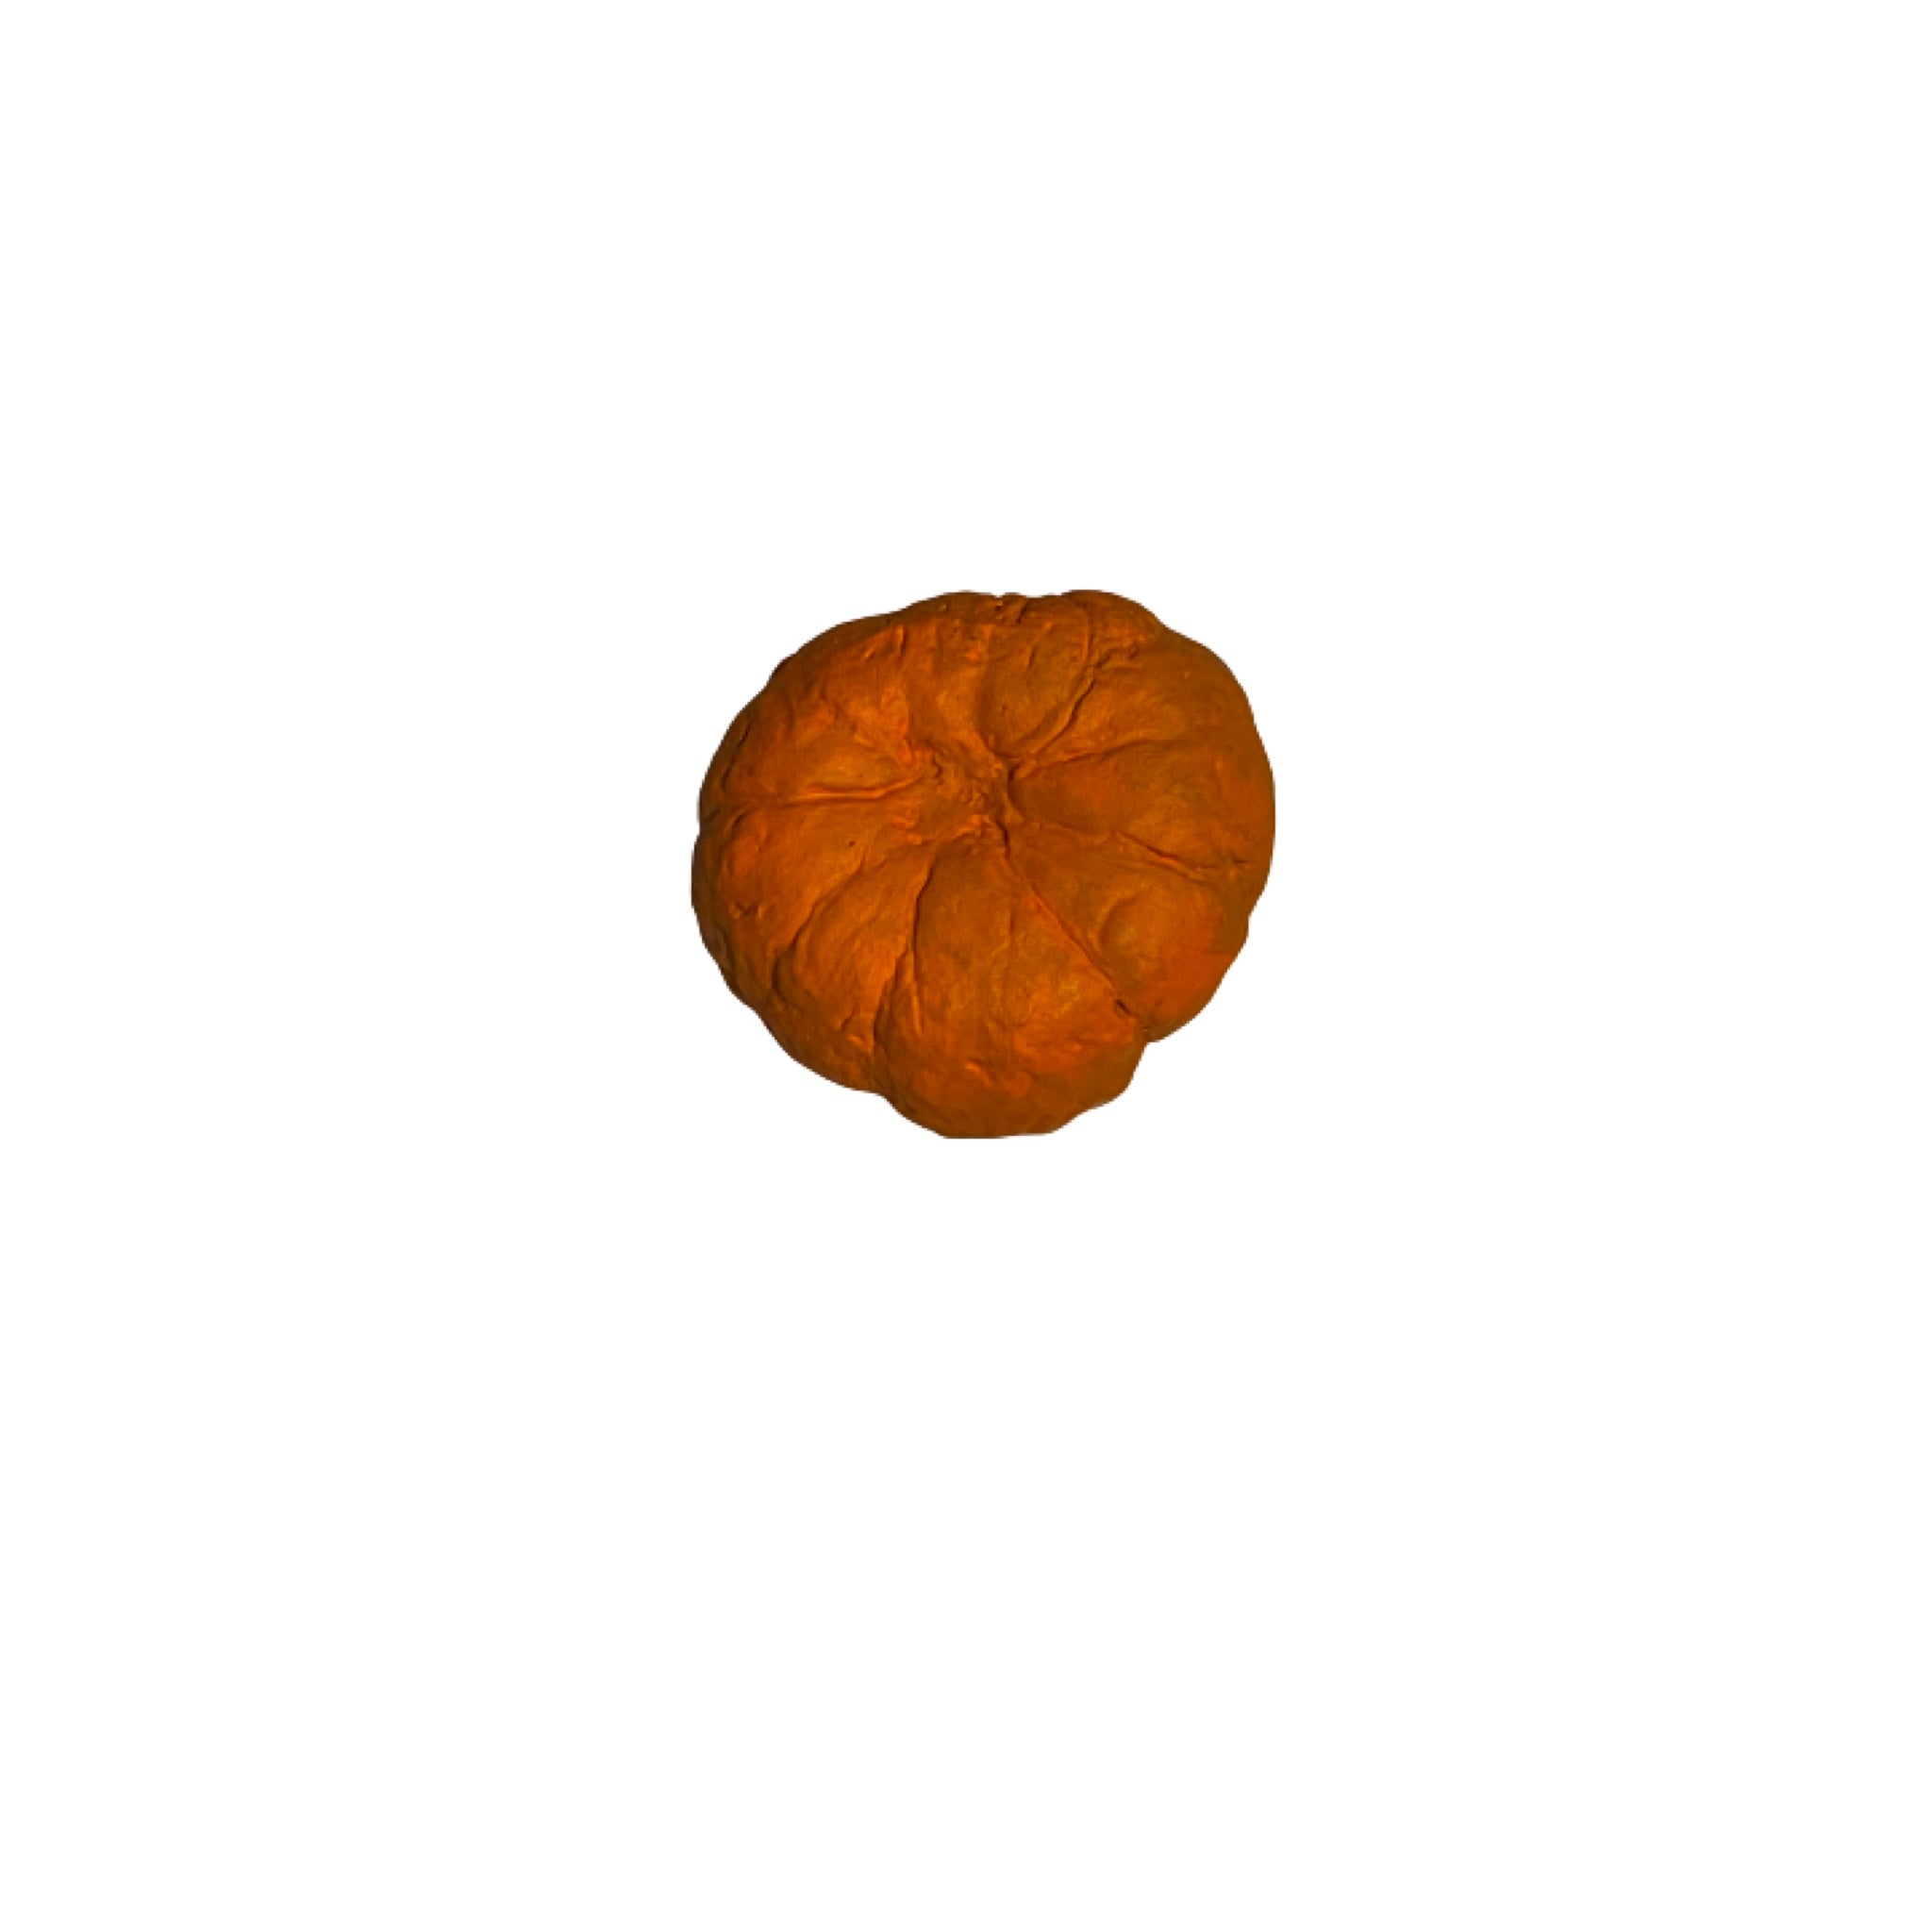 “A peeling” orange crush air plant display